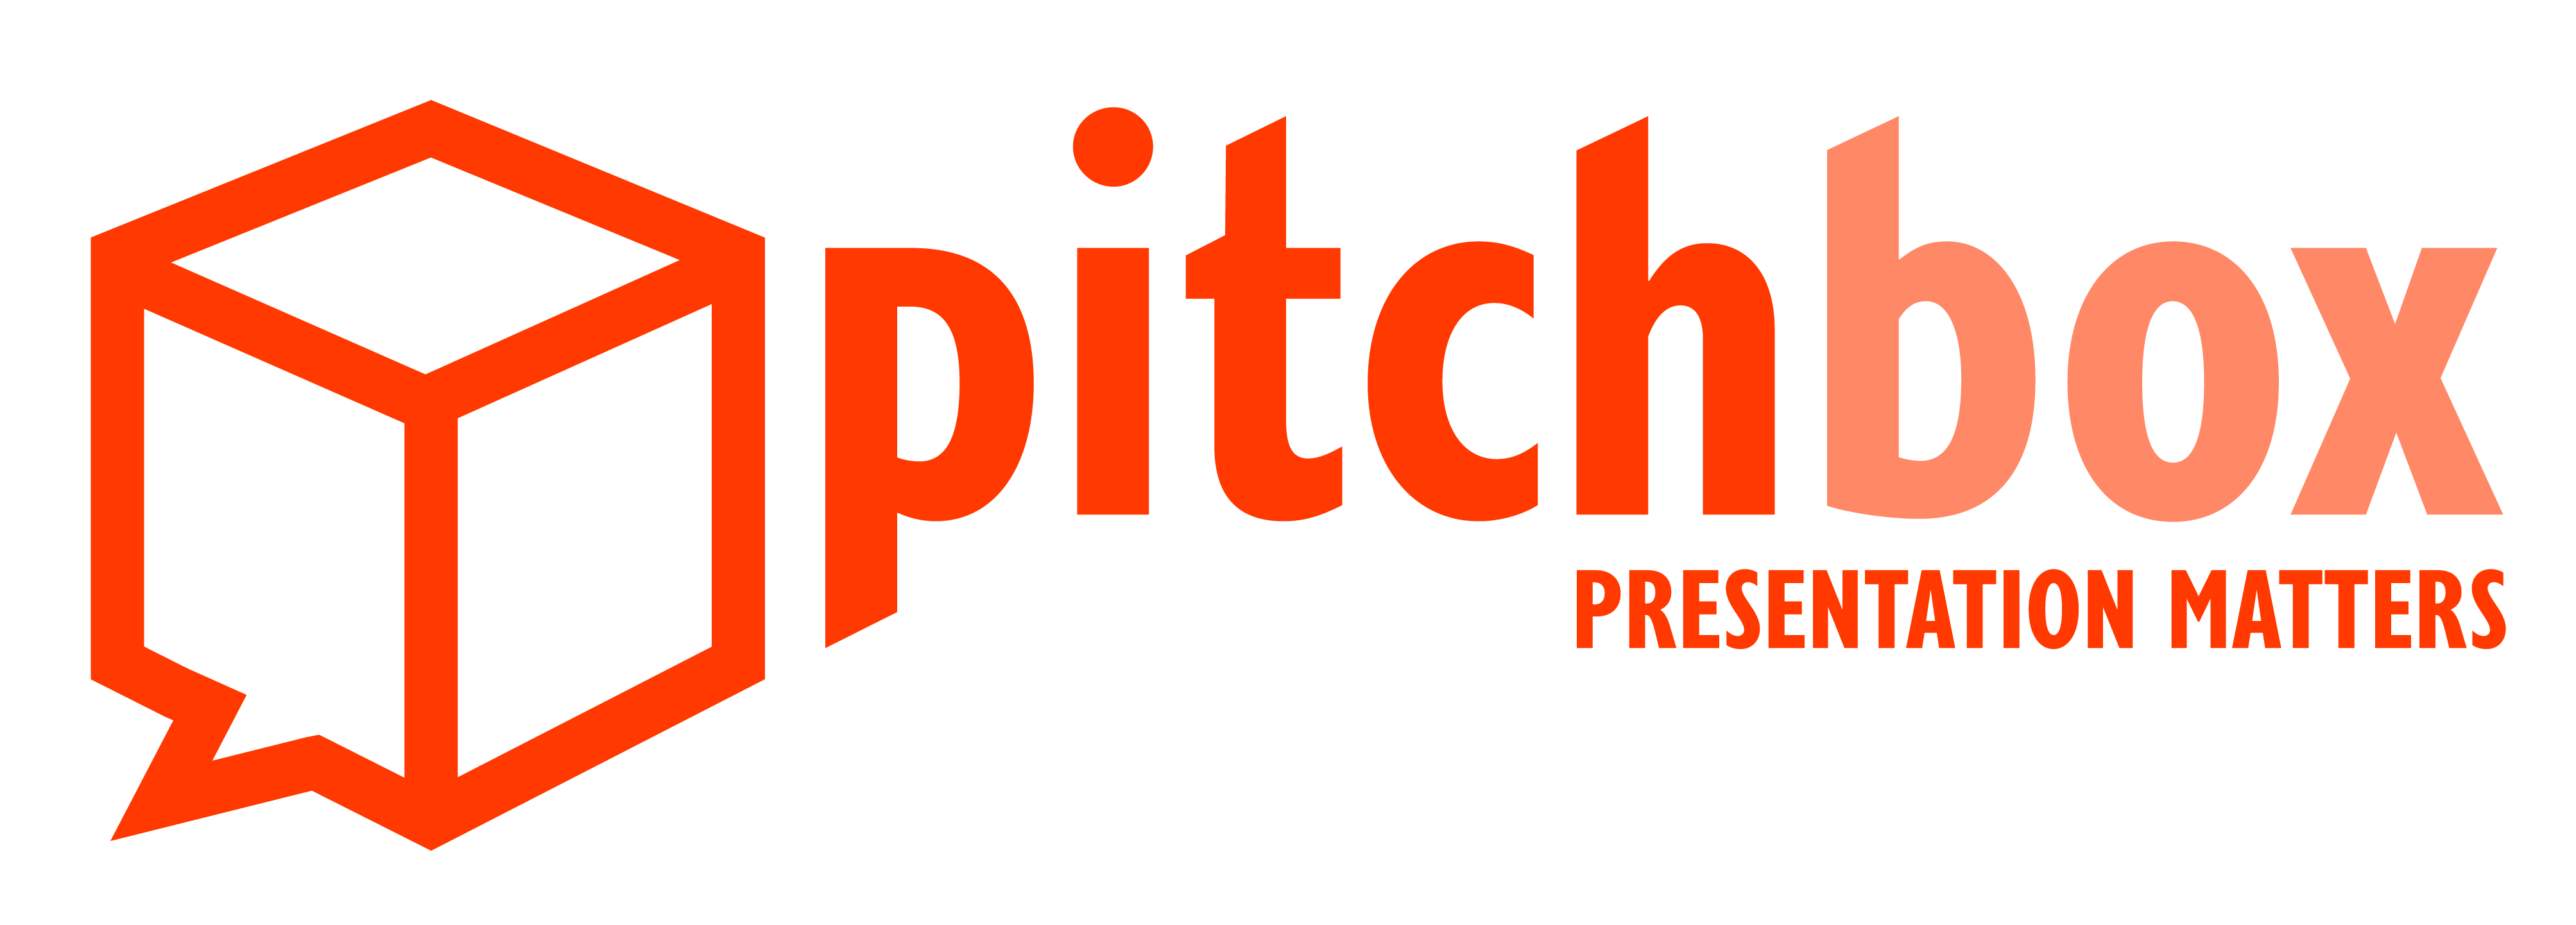 PITCHBOX logo horizontal-08